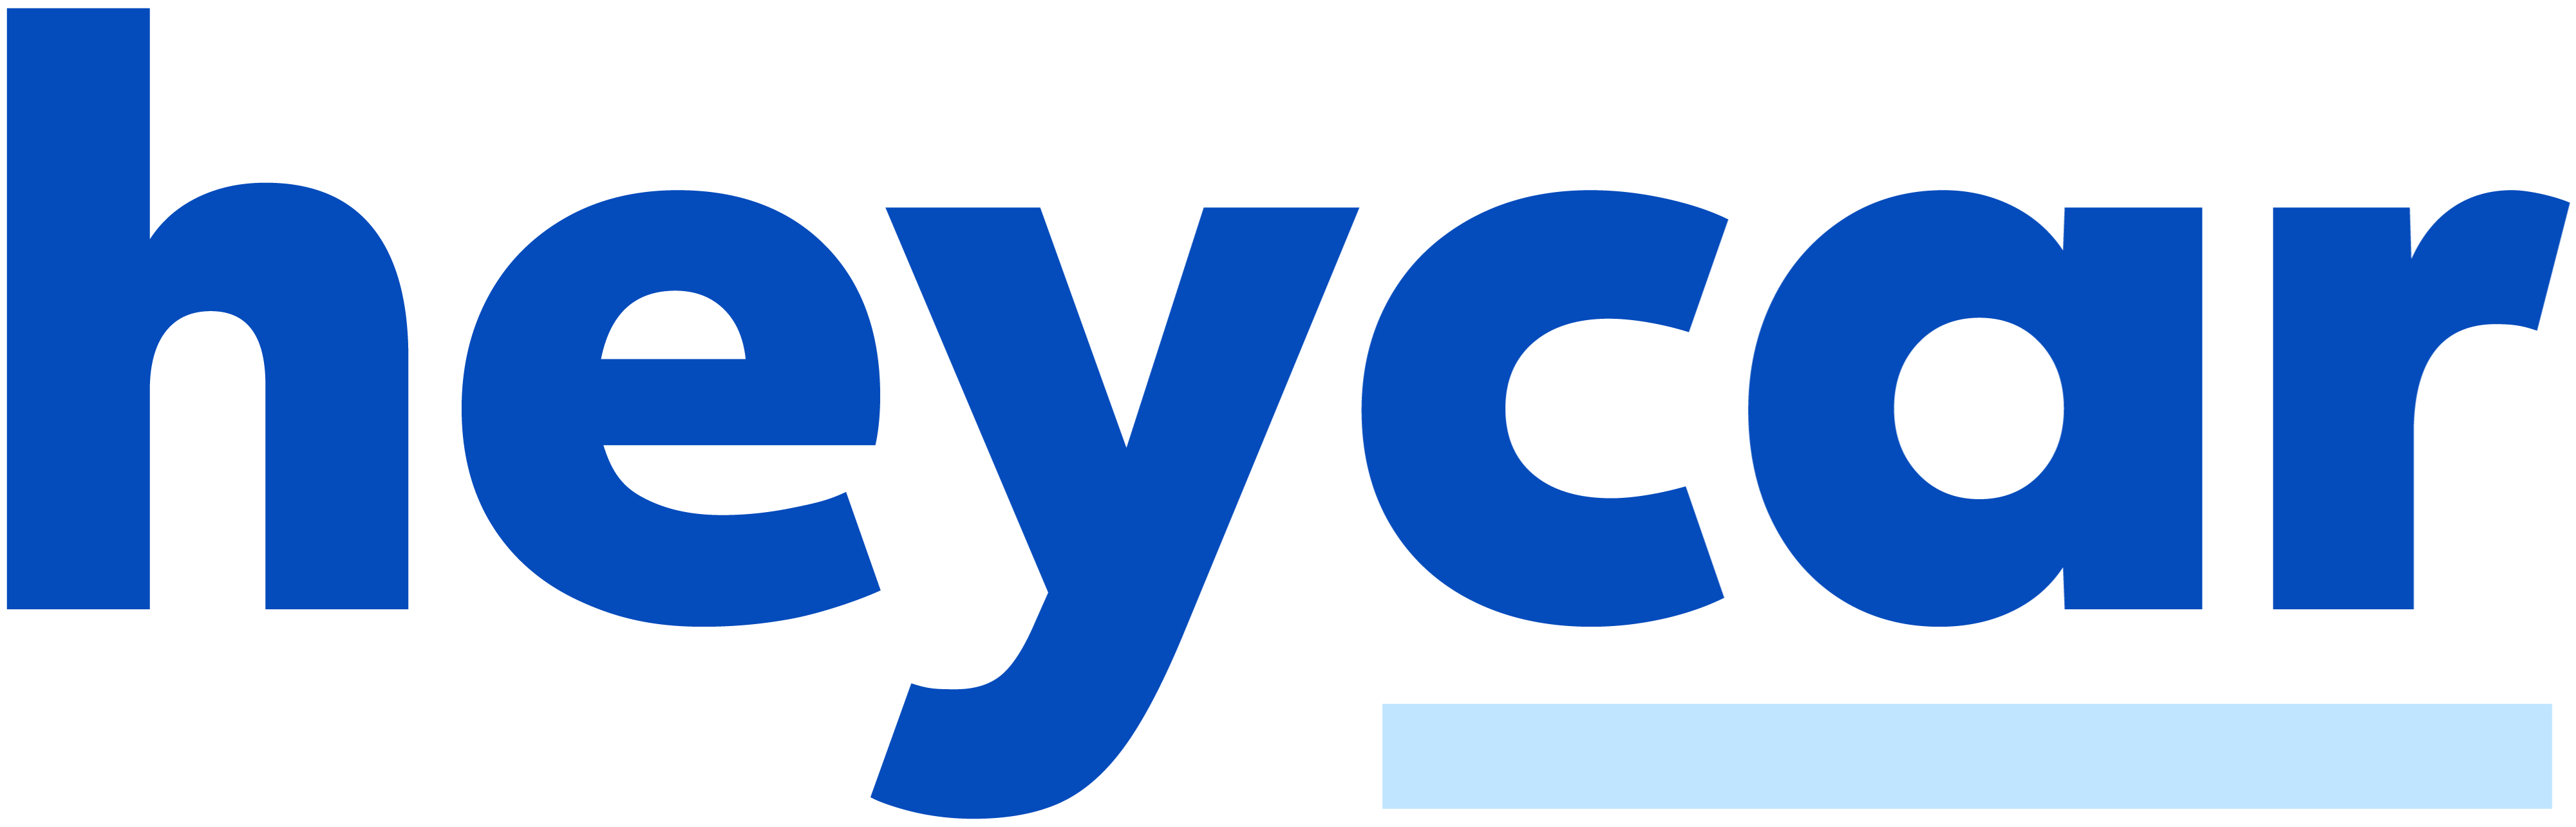 heycar_UK_logo.png